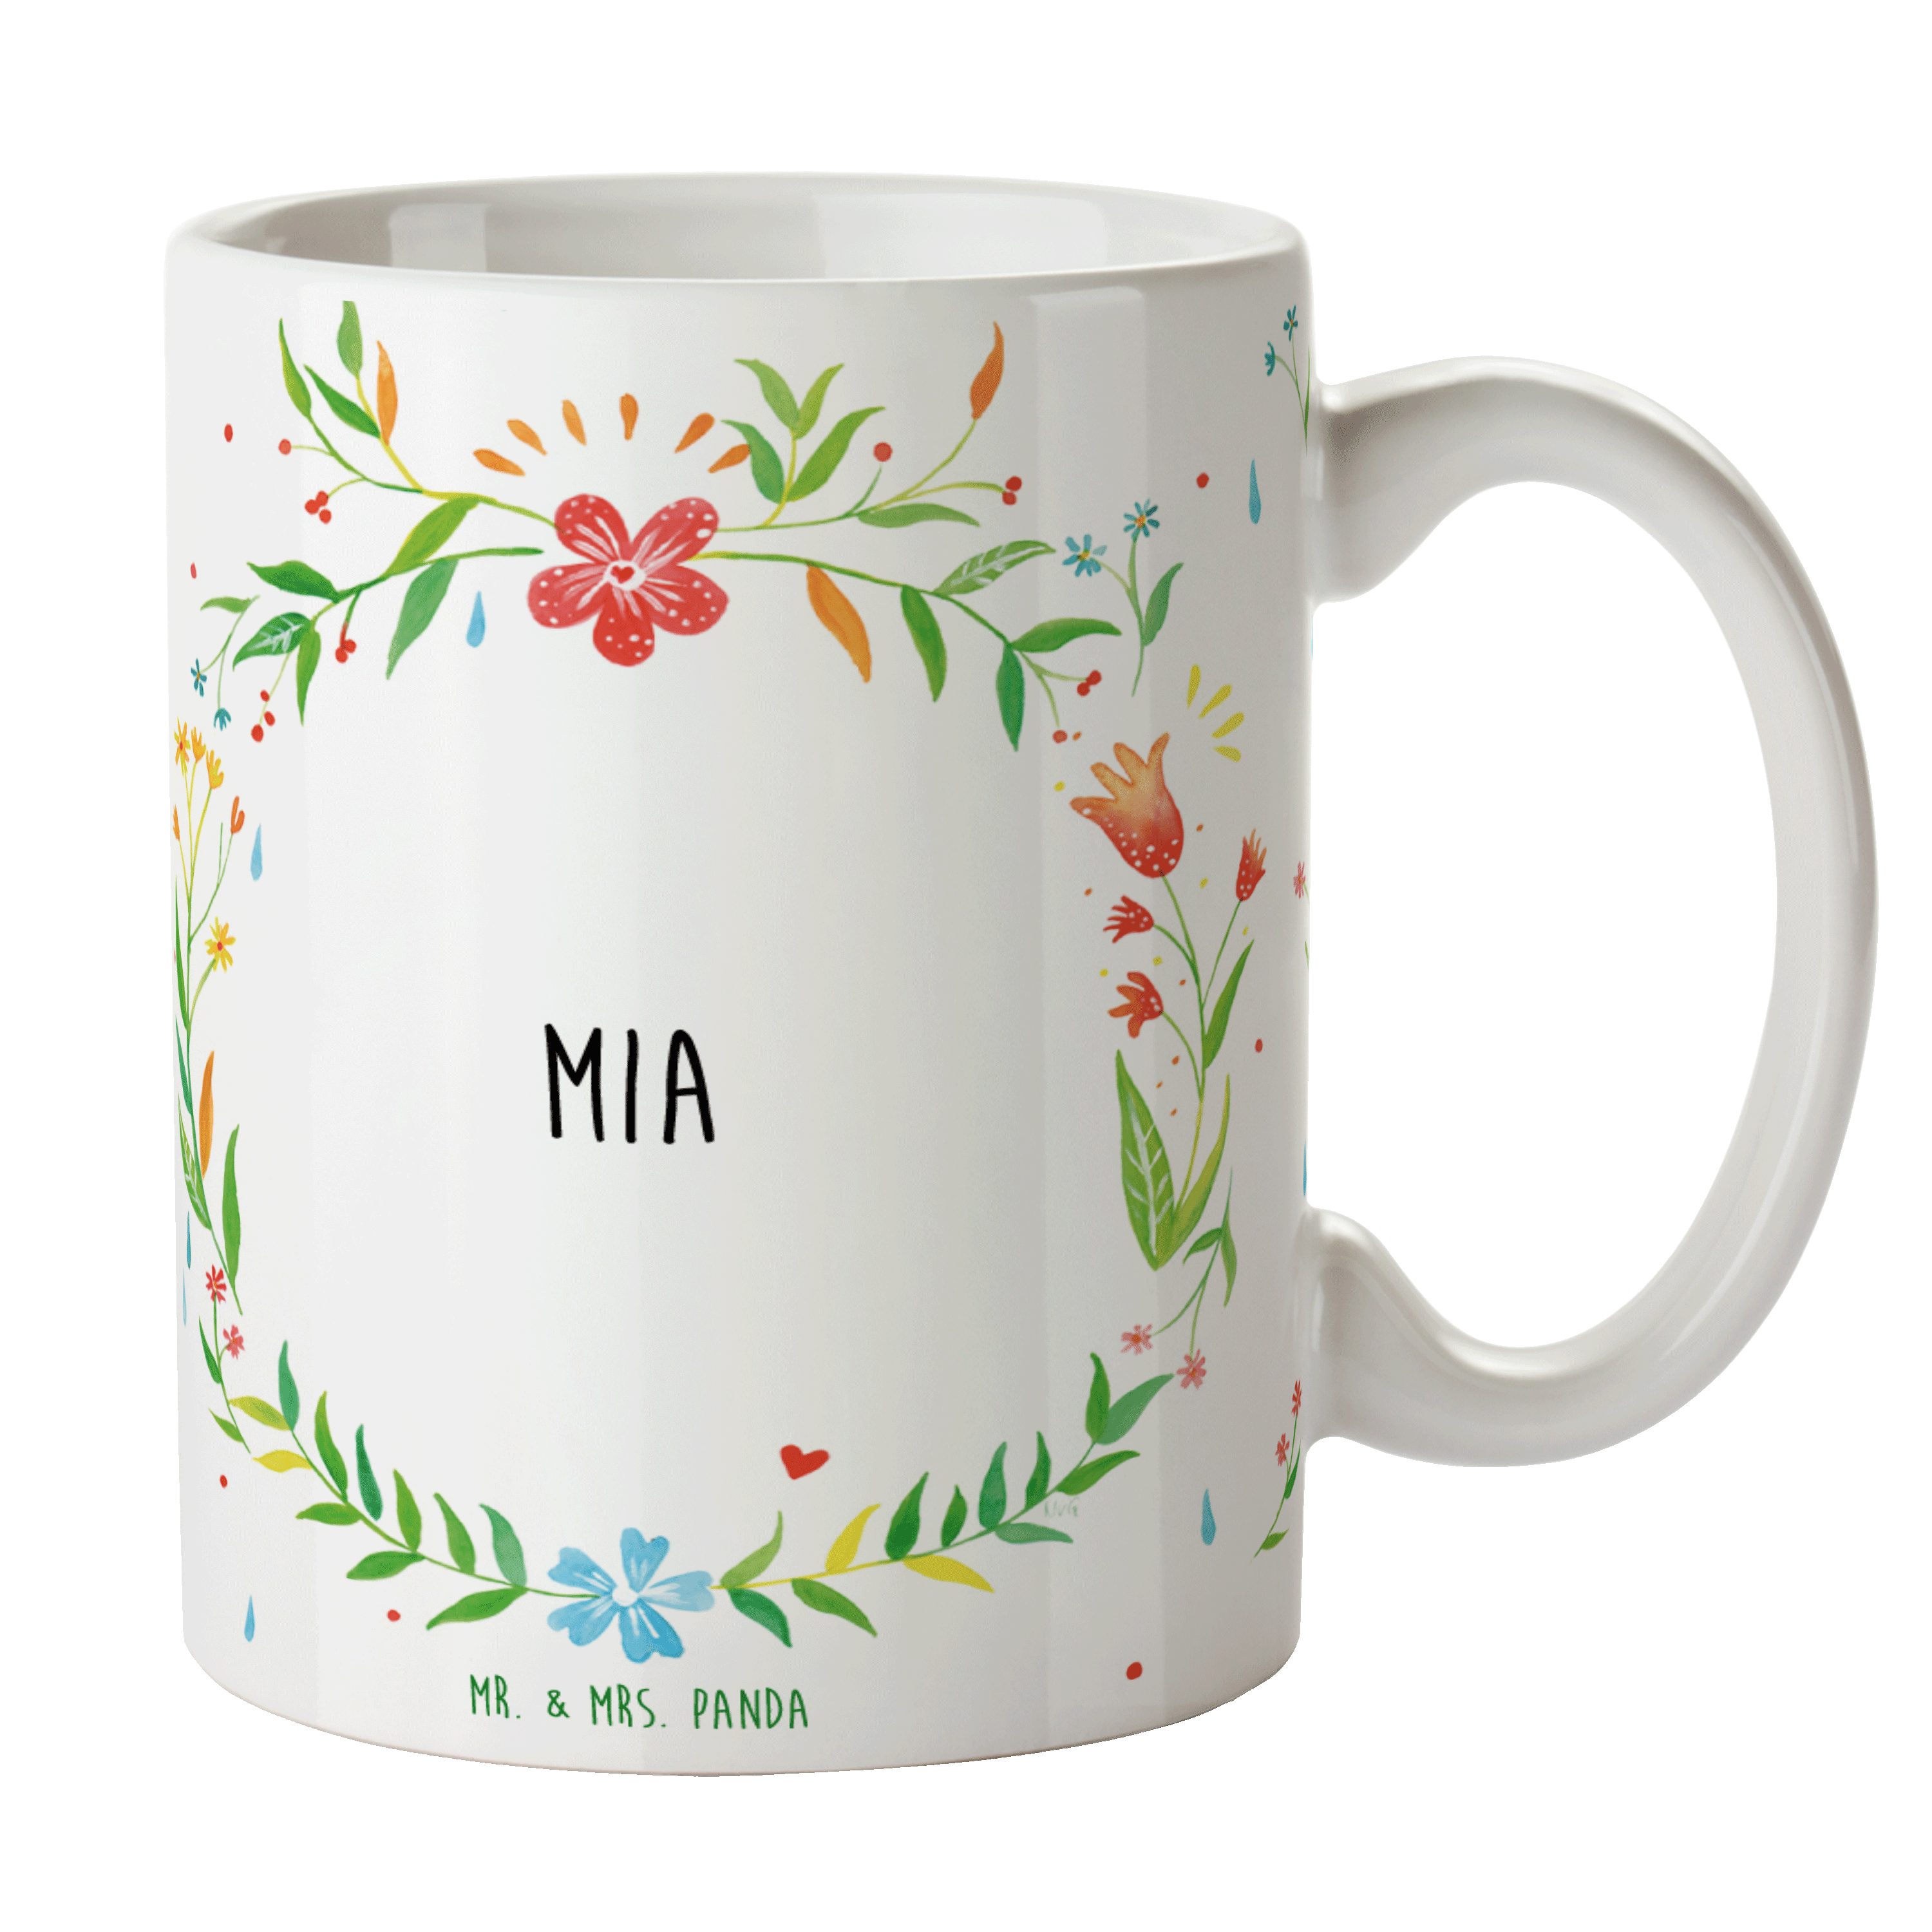 Mr. & Mrs. Panda Tasse Mia - Geschenk, Becher, Porzellantasse, Tasse, Teebecher, Kaffeebeche, Keramik